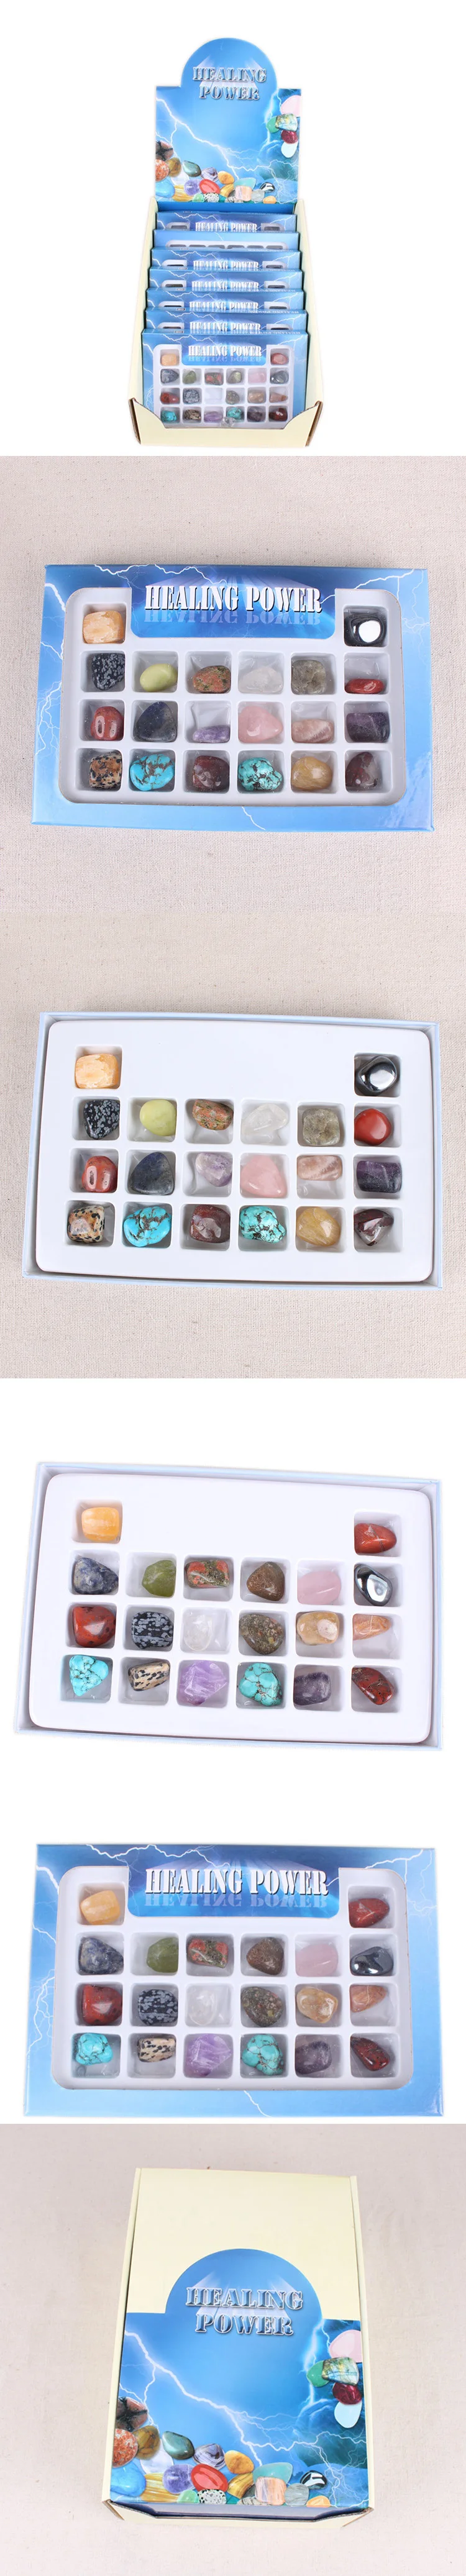 20pcs Boxed Natural Stone Crystal Gemstone Polished Healing Collection Display